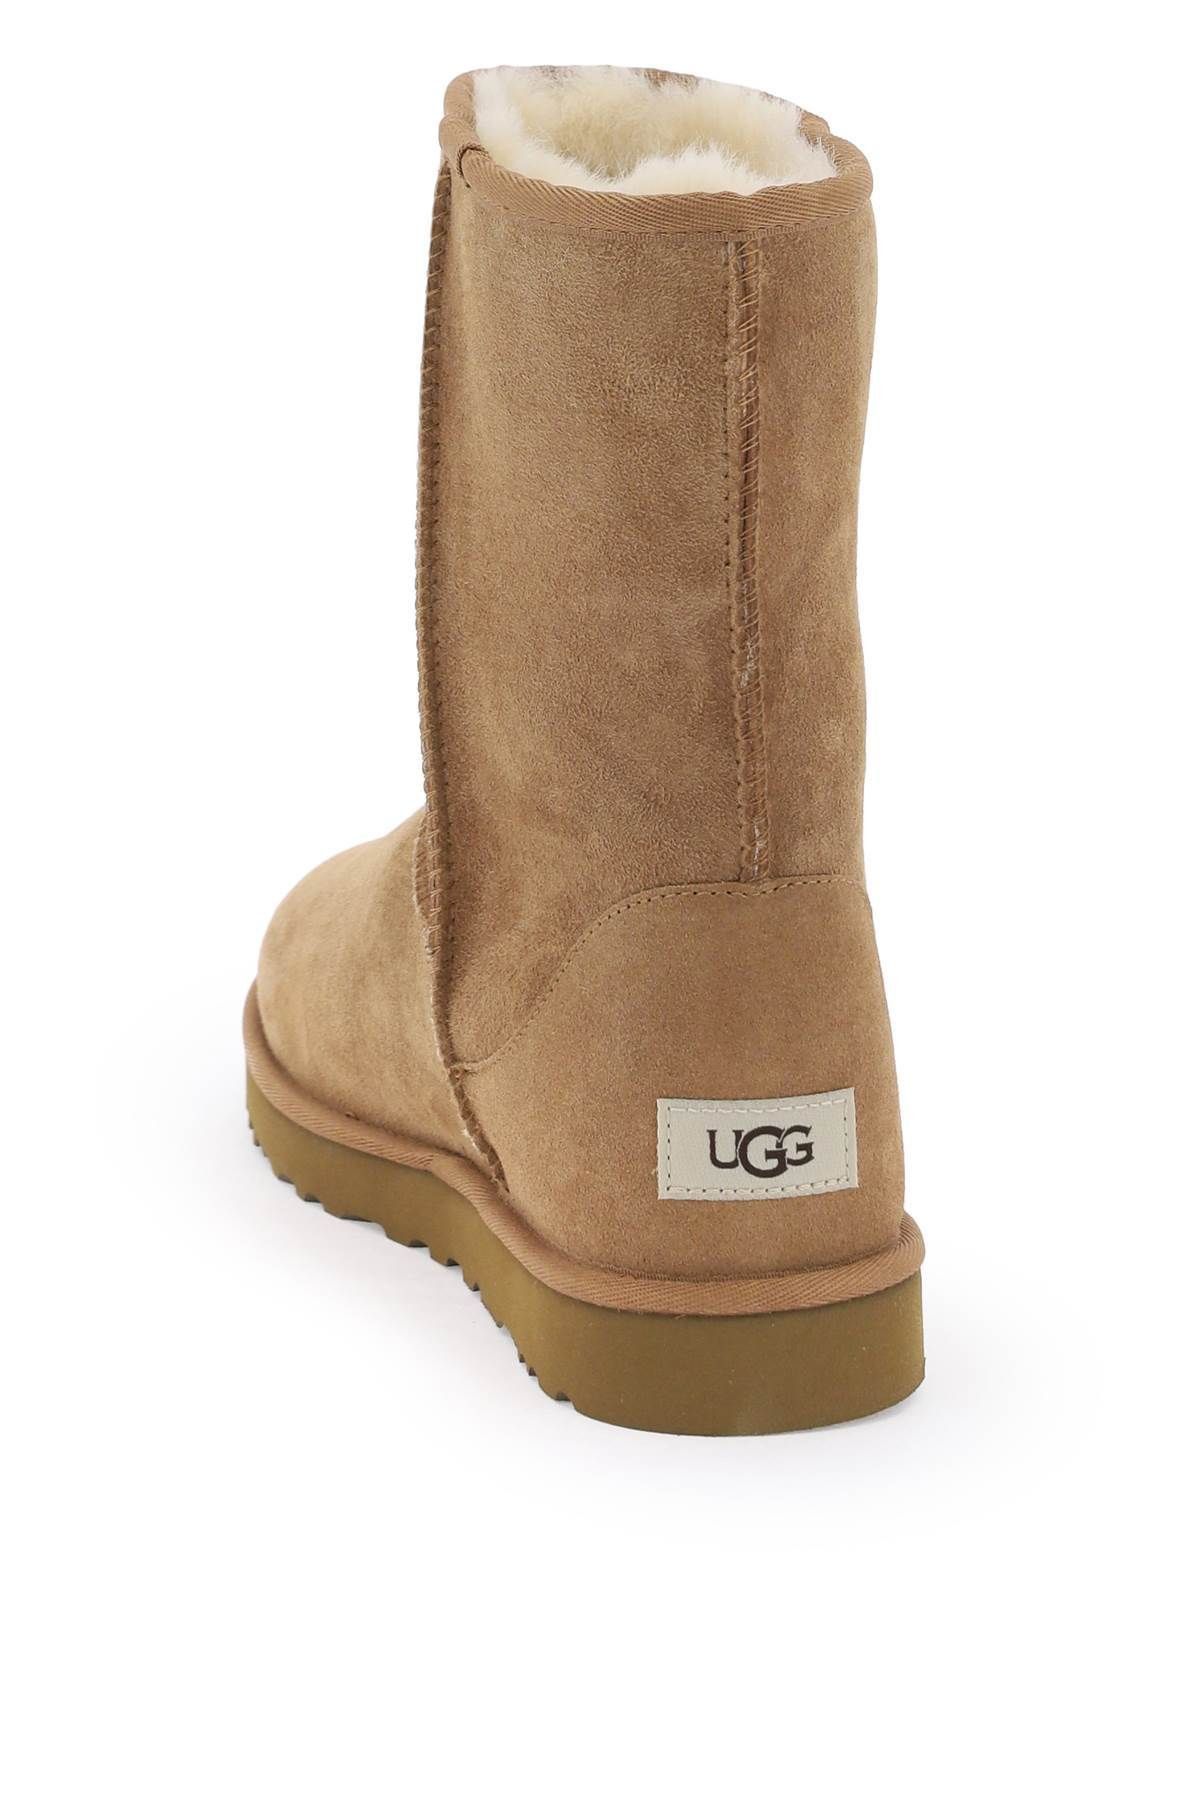 Ugg - Classic Short Boots Size EU 42 for Men - 2